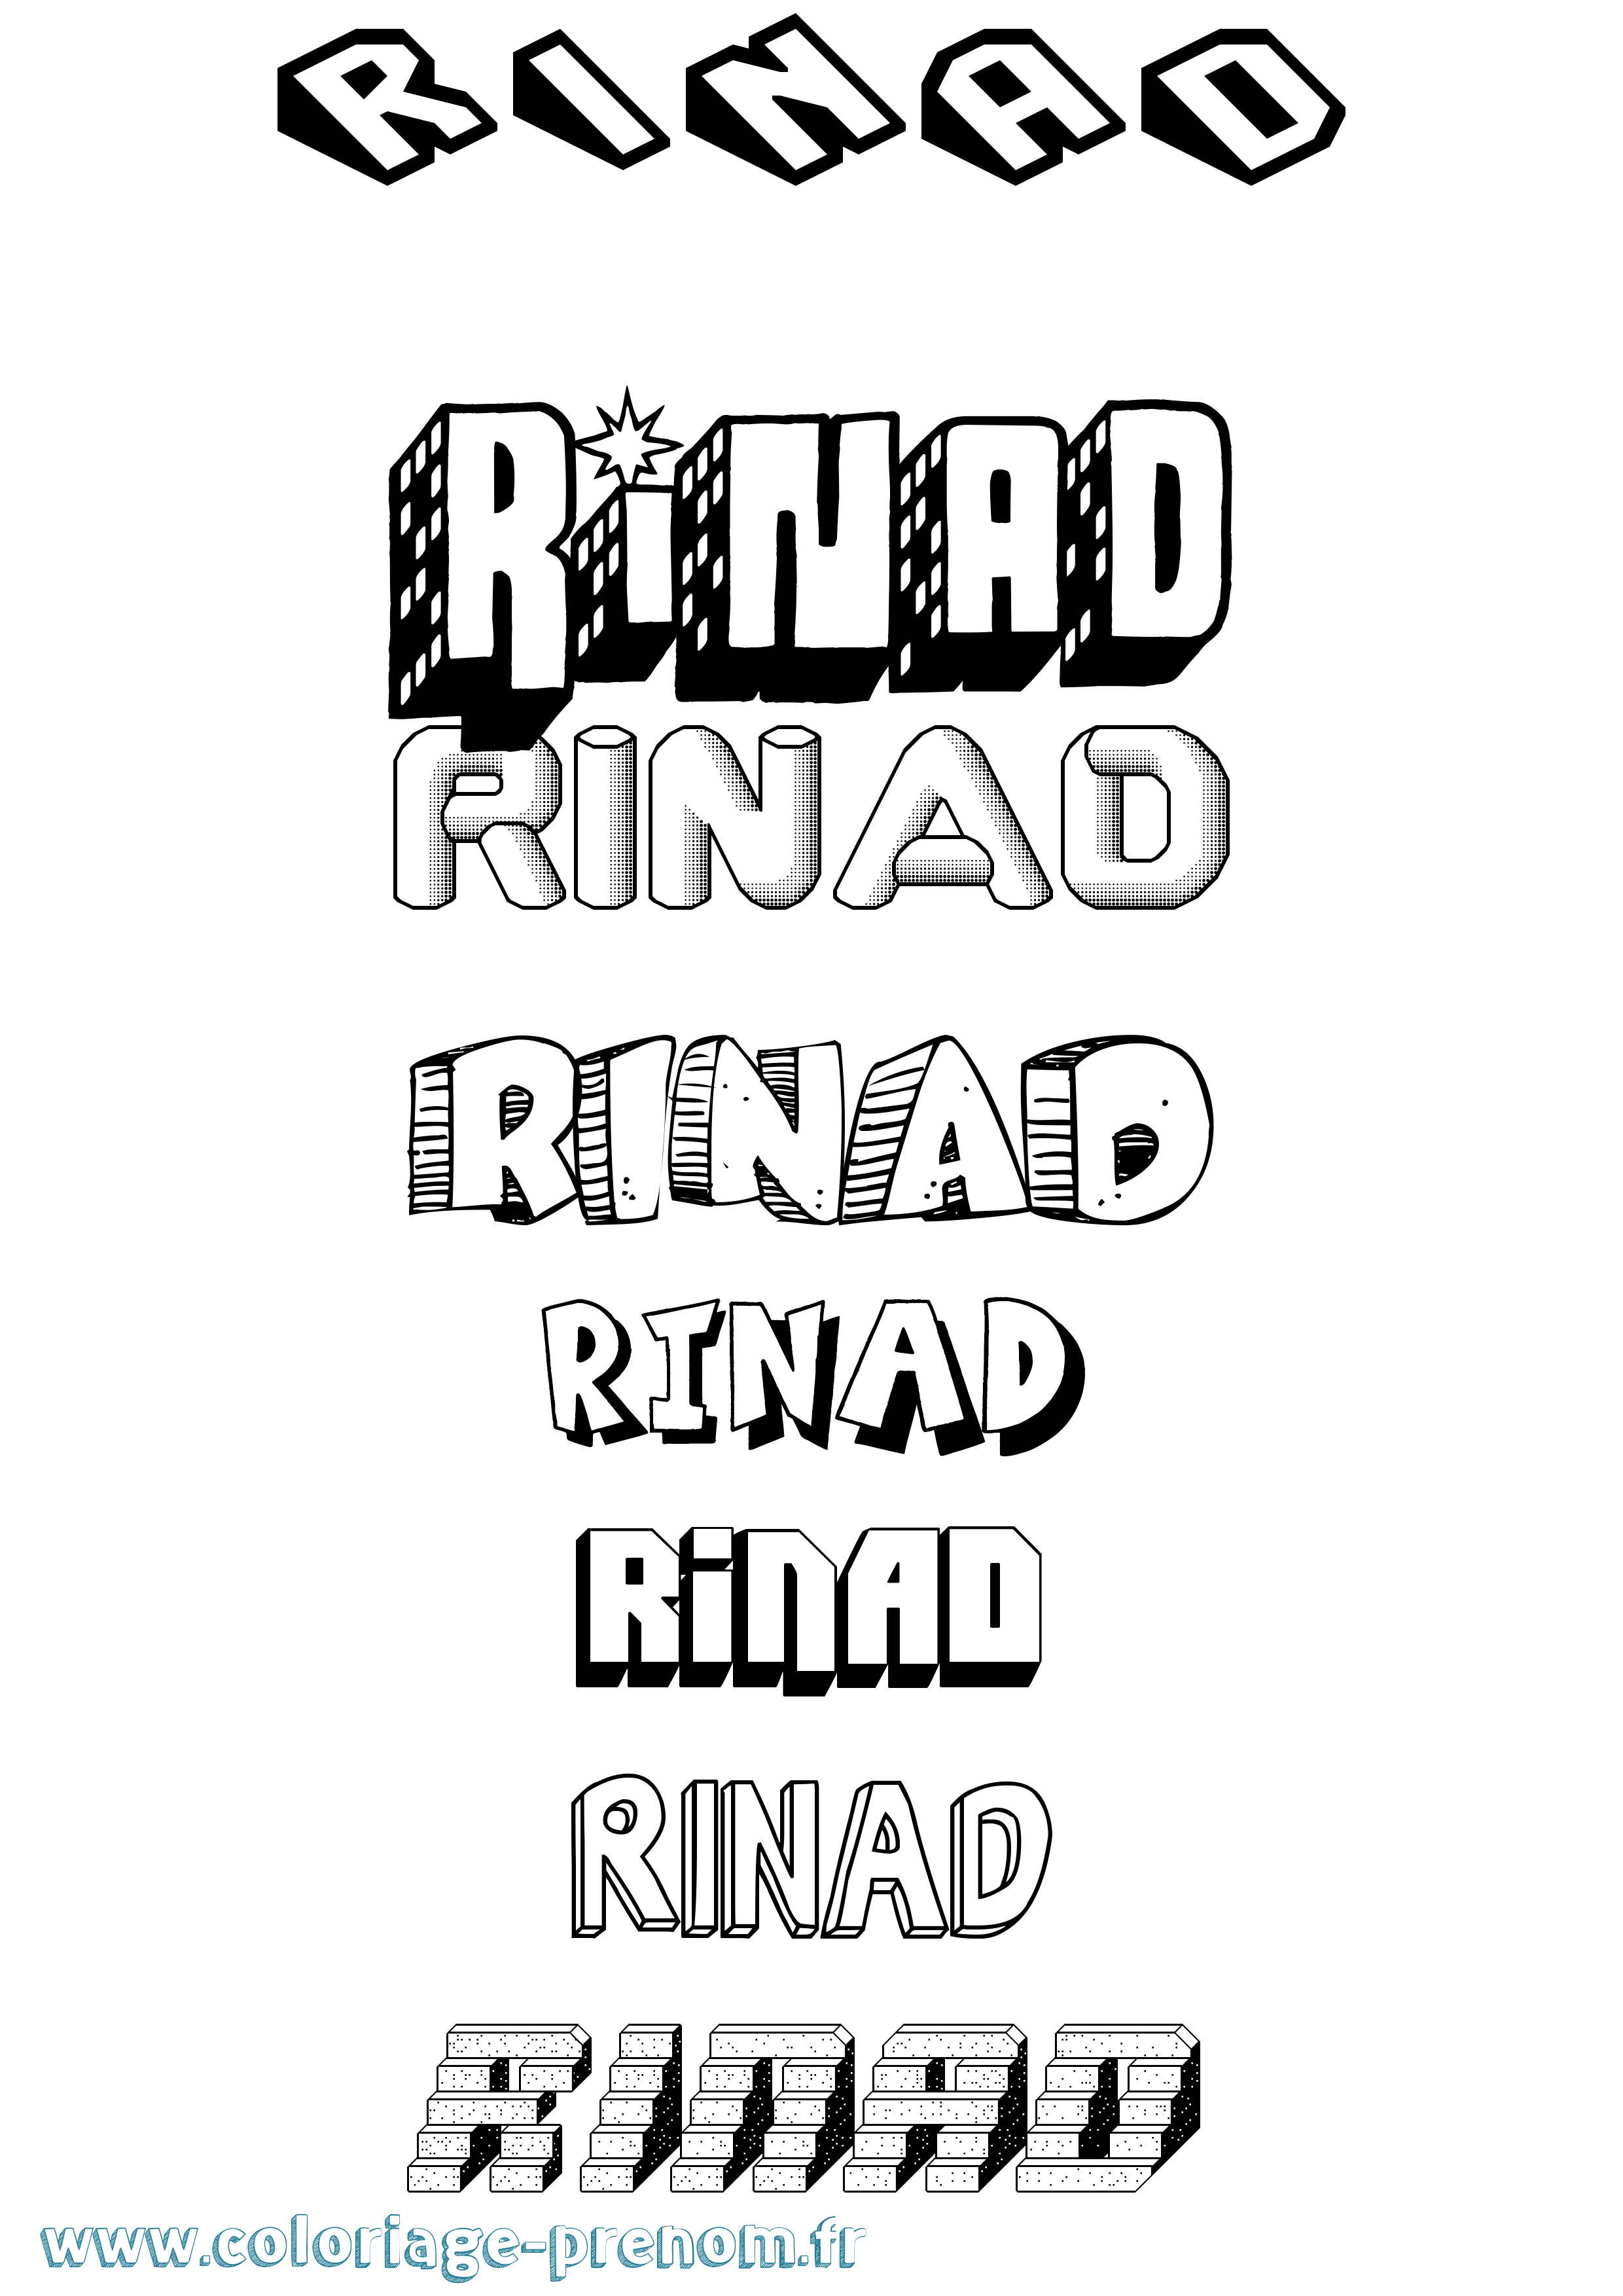 Coloriage prénom Rinad Effet 3D